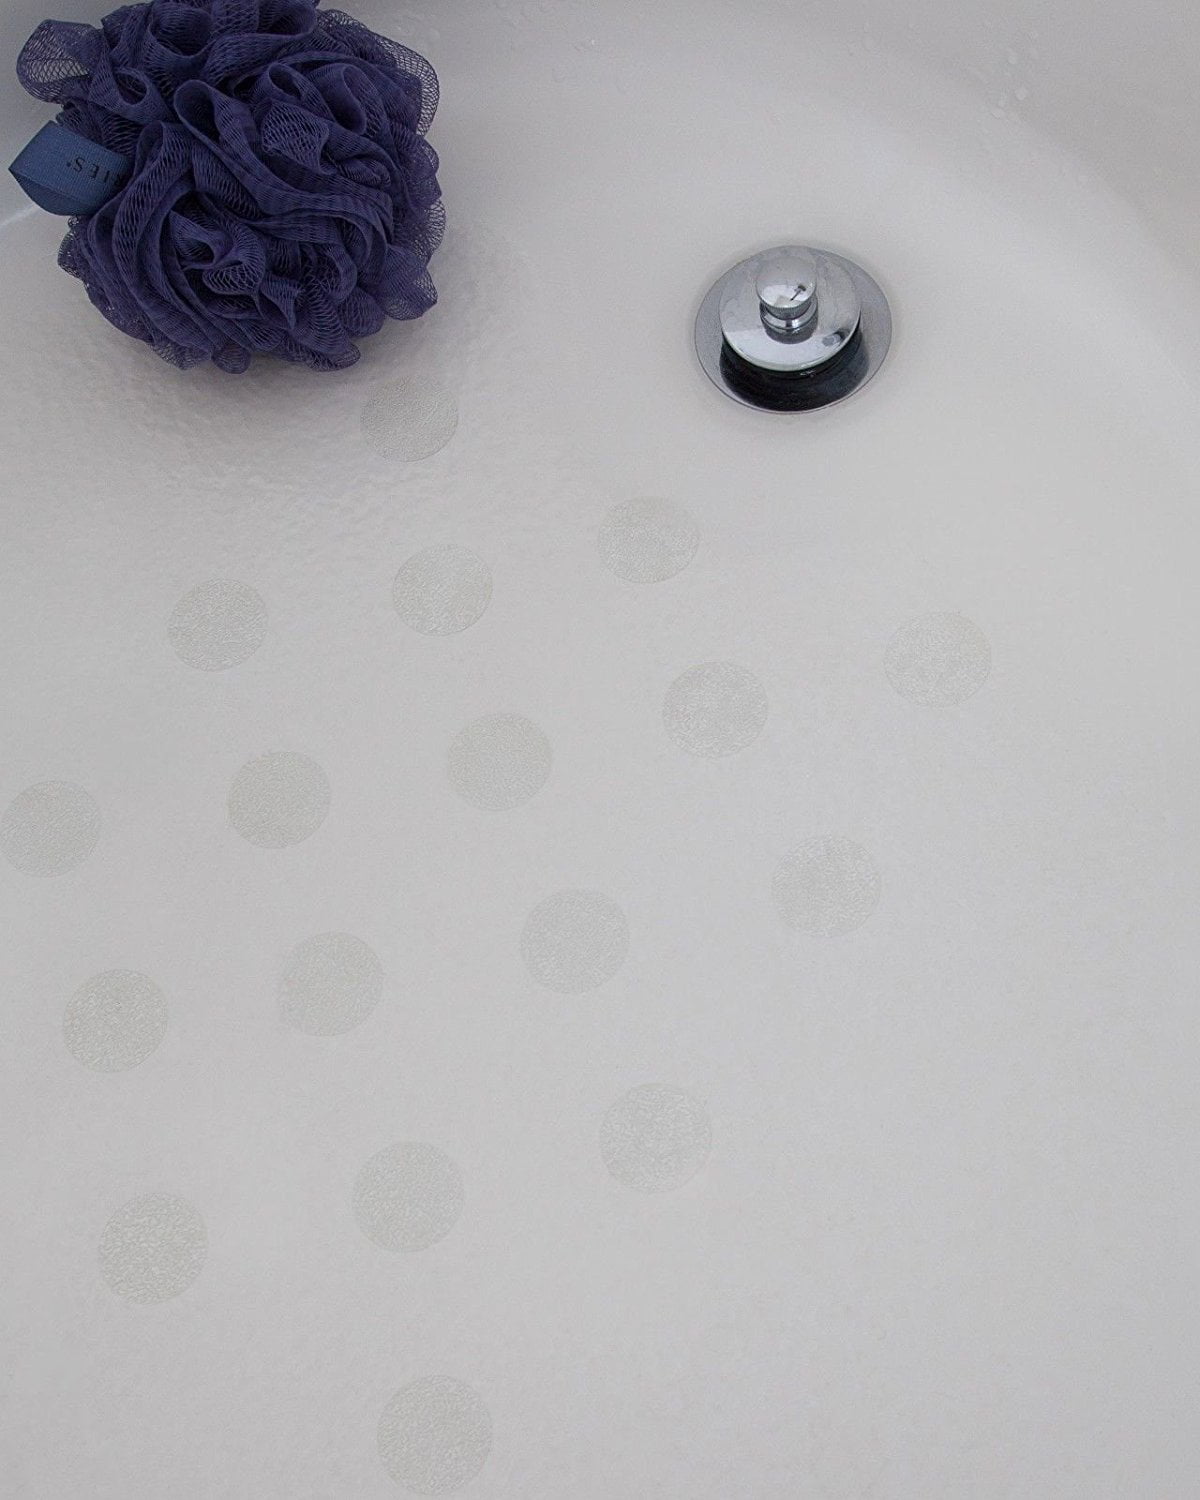 12xSafe Strips Clear Non-Slip Safety Applique Mat Stickers-Bath&Tub&Shower 2019 